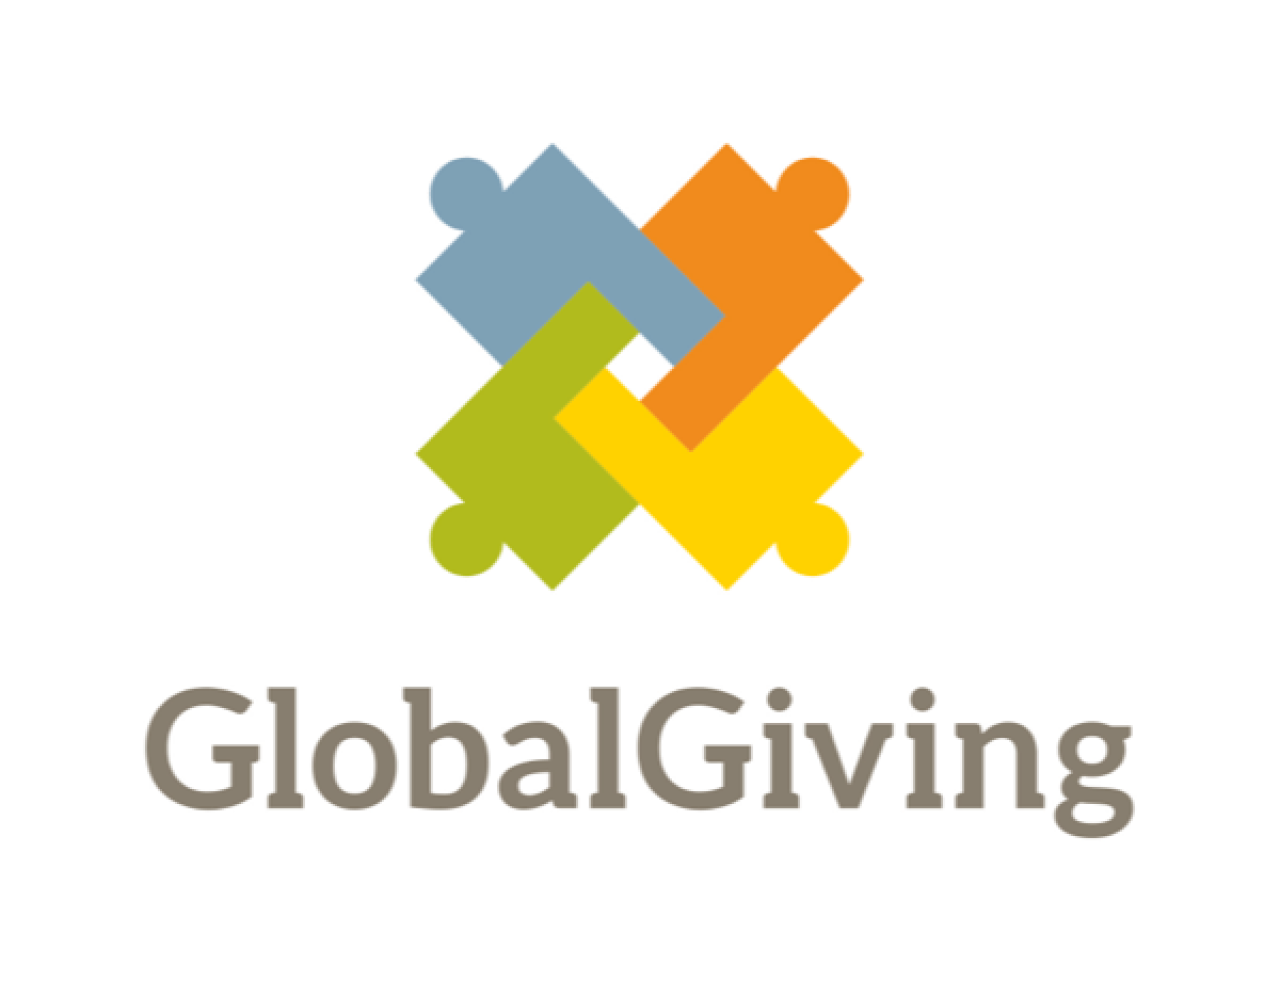 globalgiving logo.